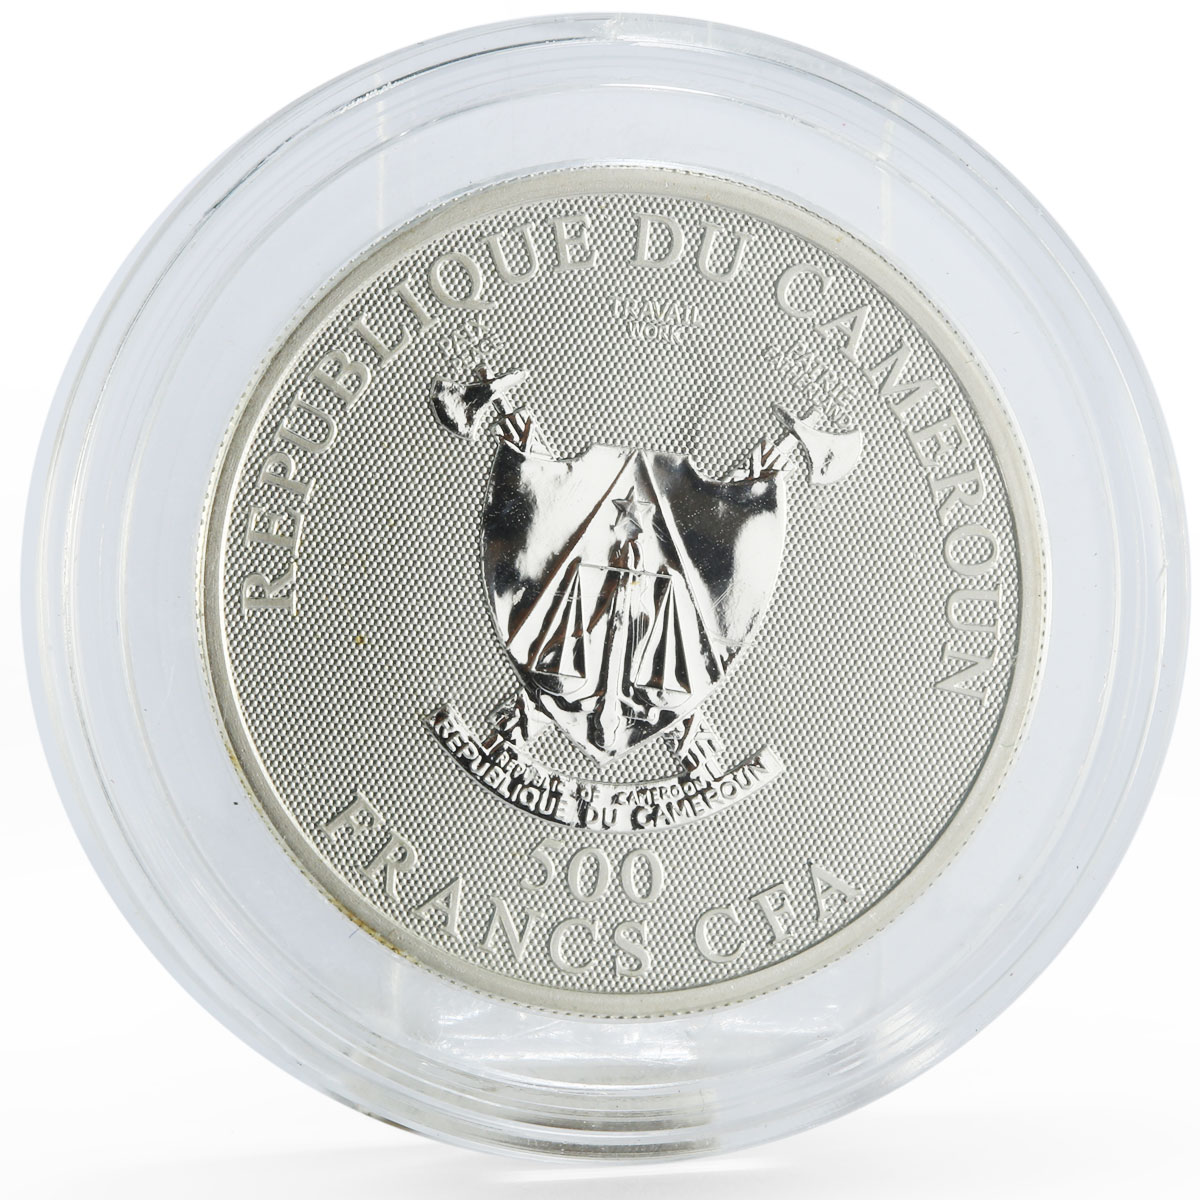 Cameroon 500 francs Zodiac Signs series Aquarius hologram silver coin 2010